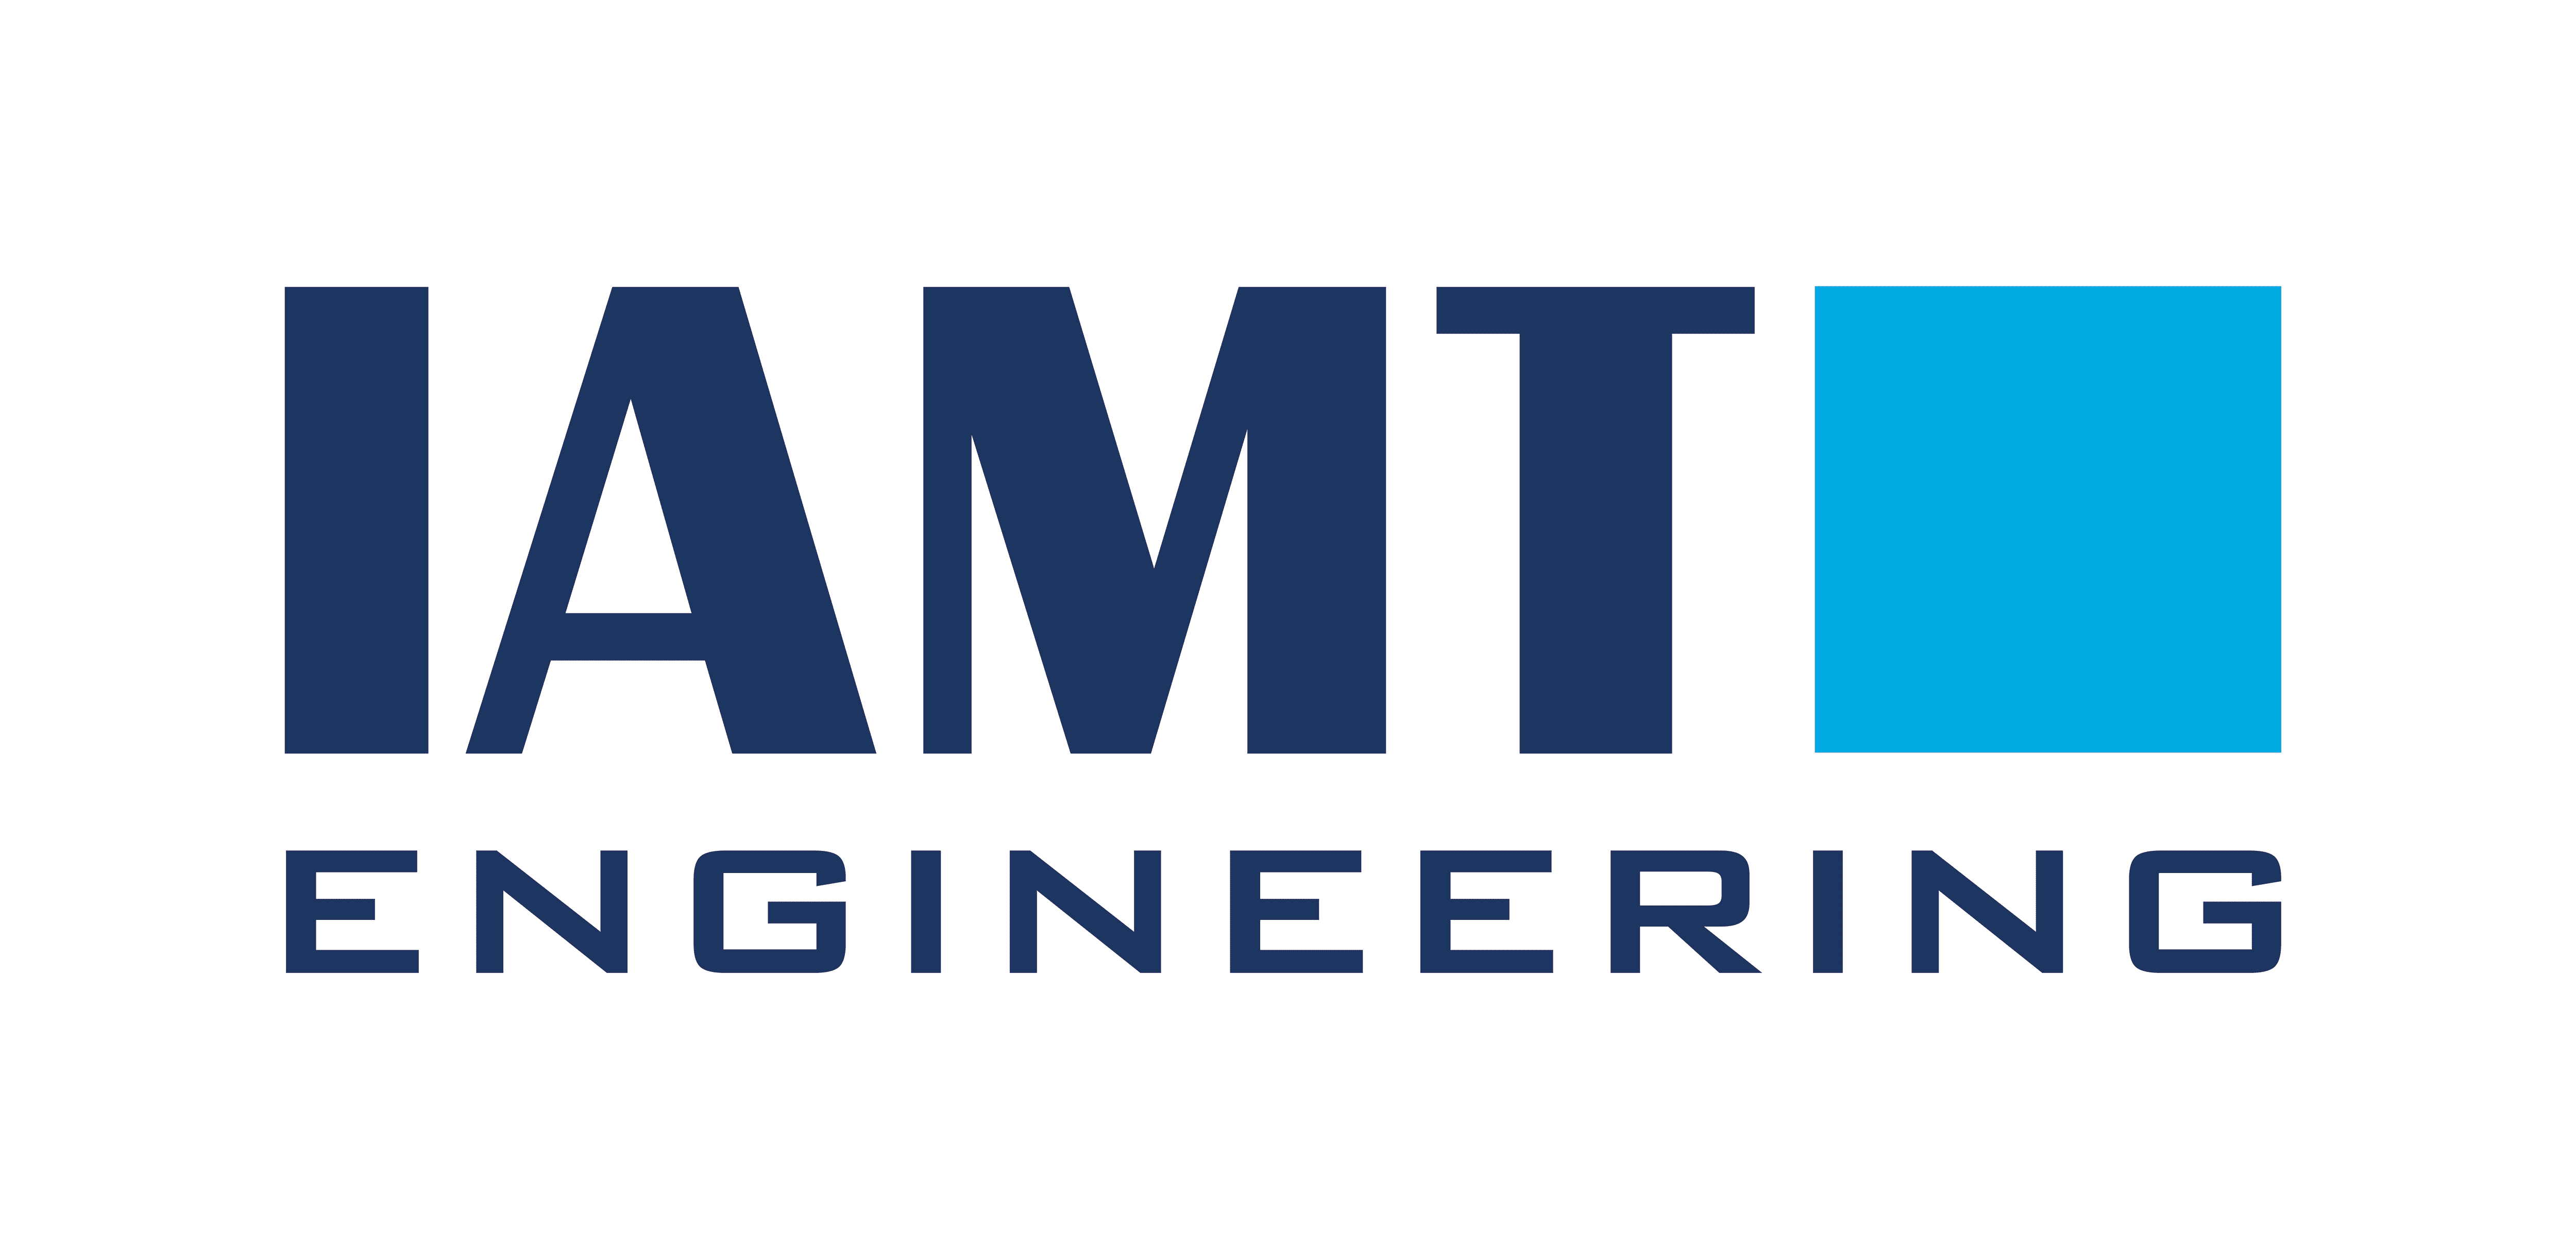 Logo IAMT Engineering GmbH & Co. KG